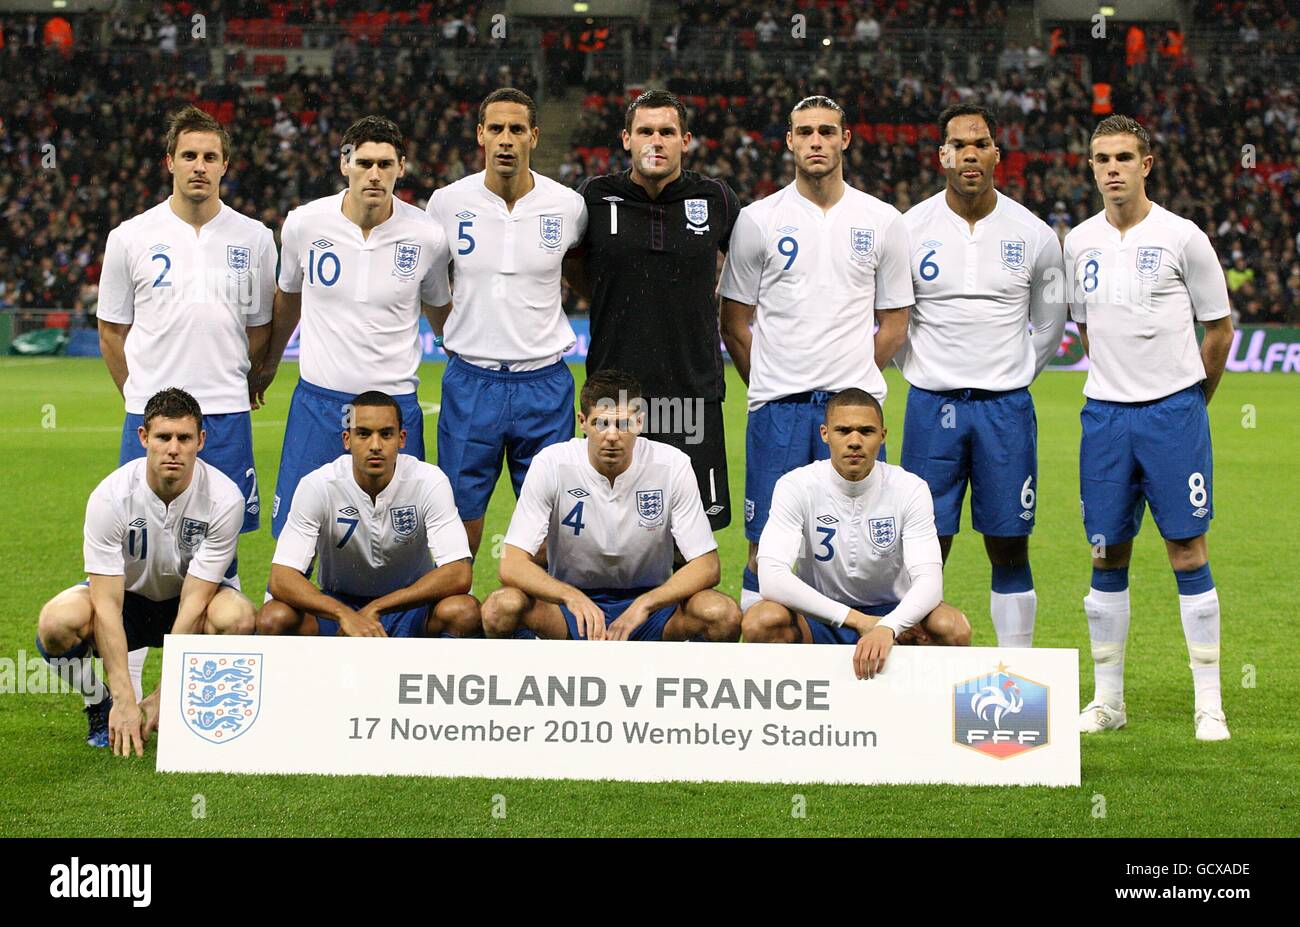 Football - International friendly - Angleterre / France - Stade Wembley. Groupe d'équipe d'Angleterre avant le lancement Banque D'Images